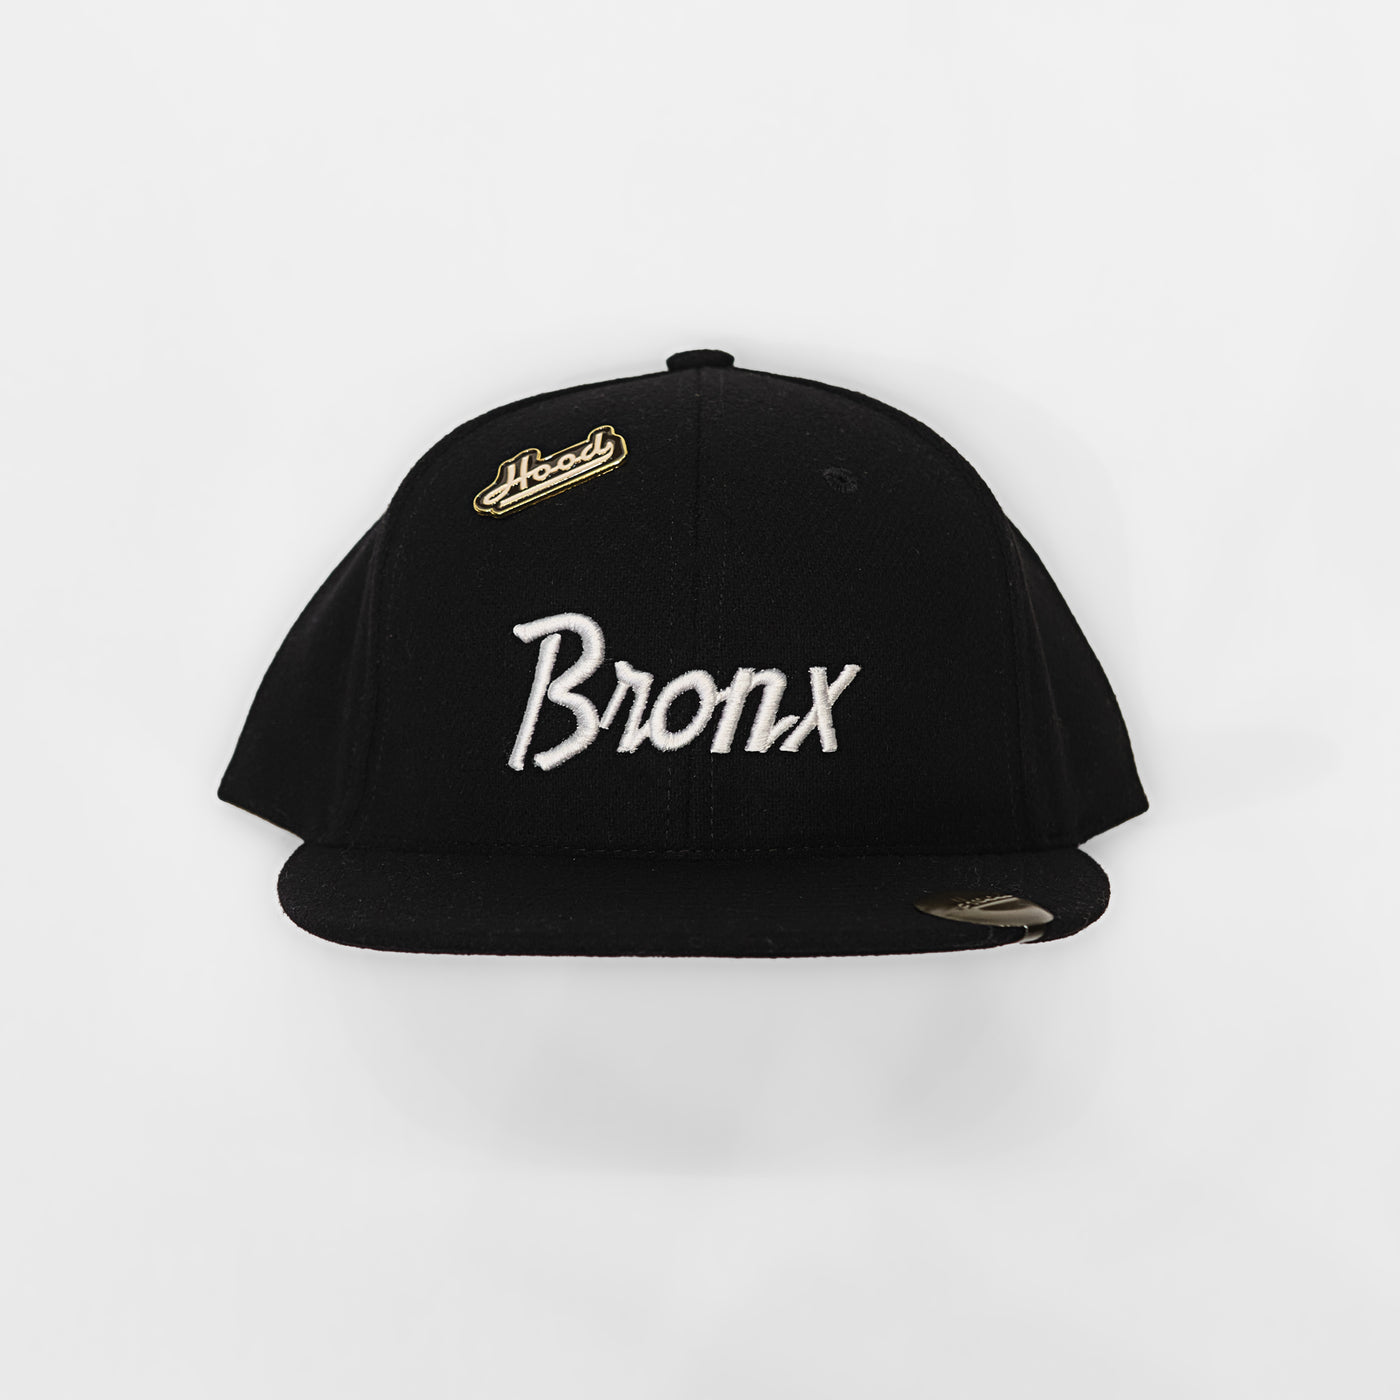 HOOD HATS "BRONX"